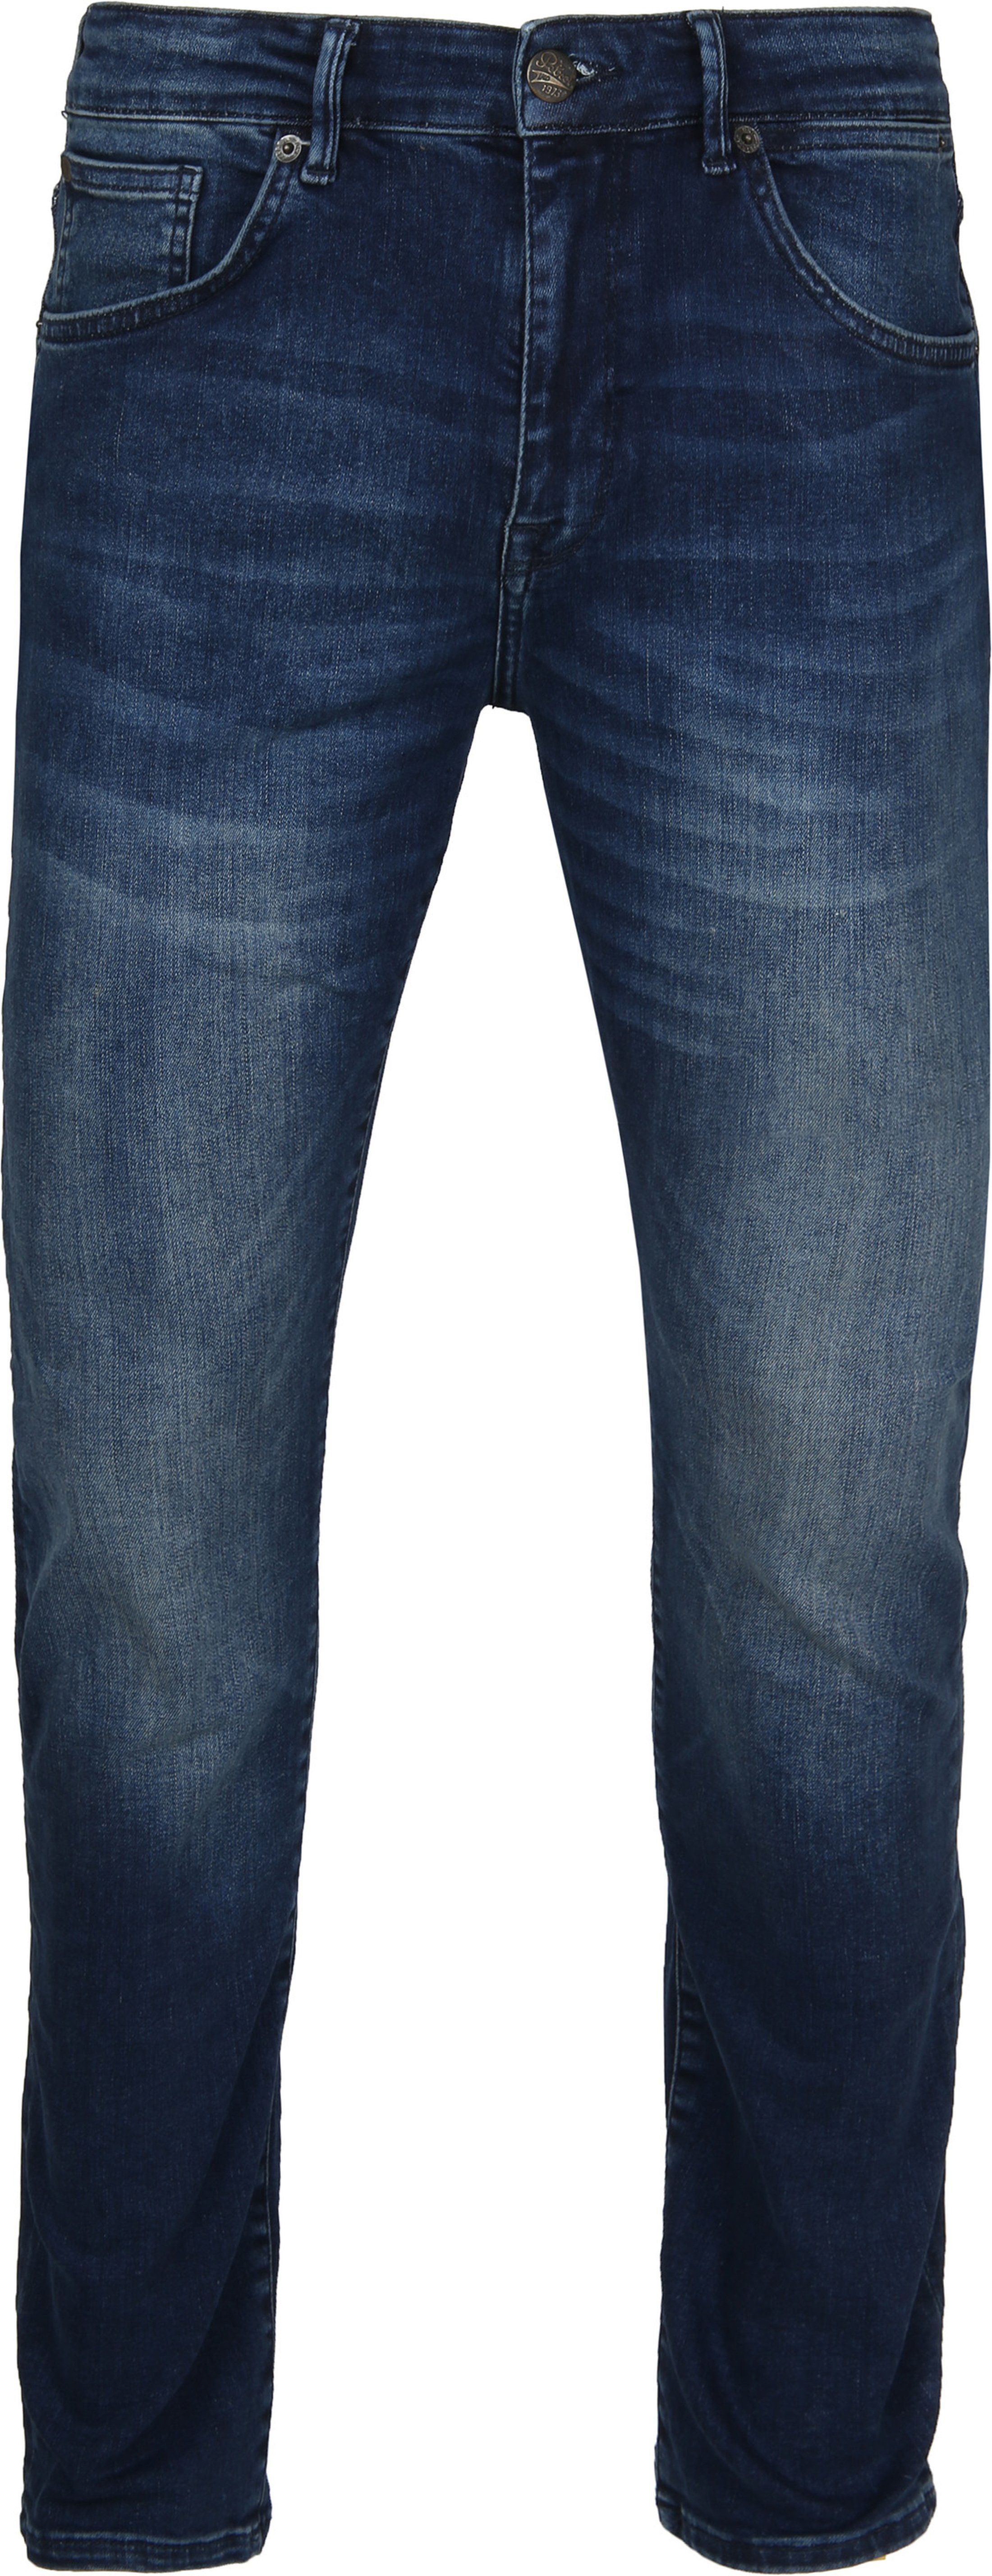 Petrol Seaham Jeans Blue size W 29